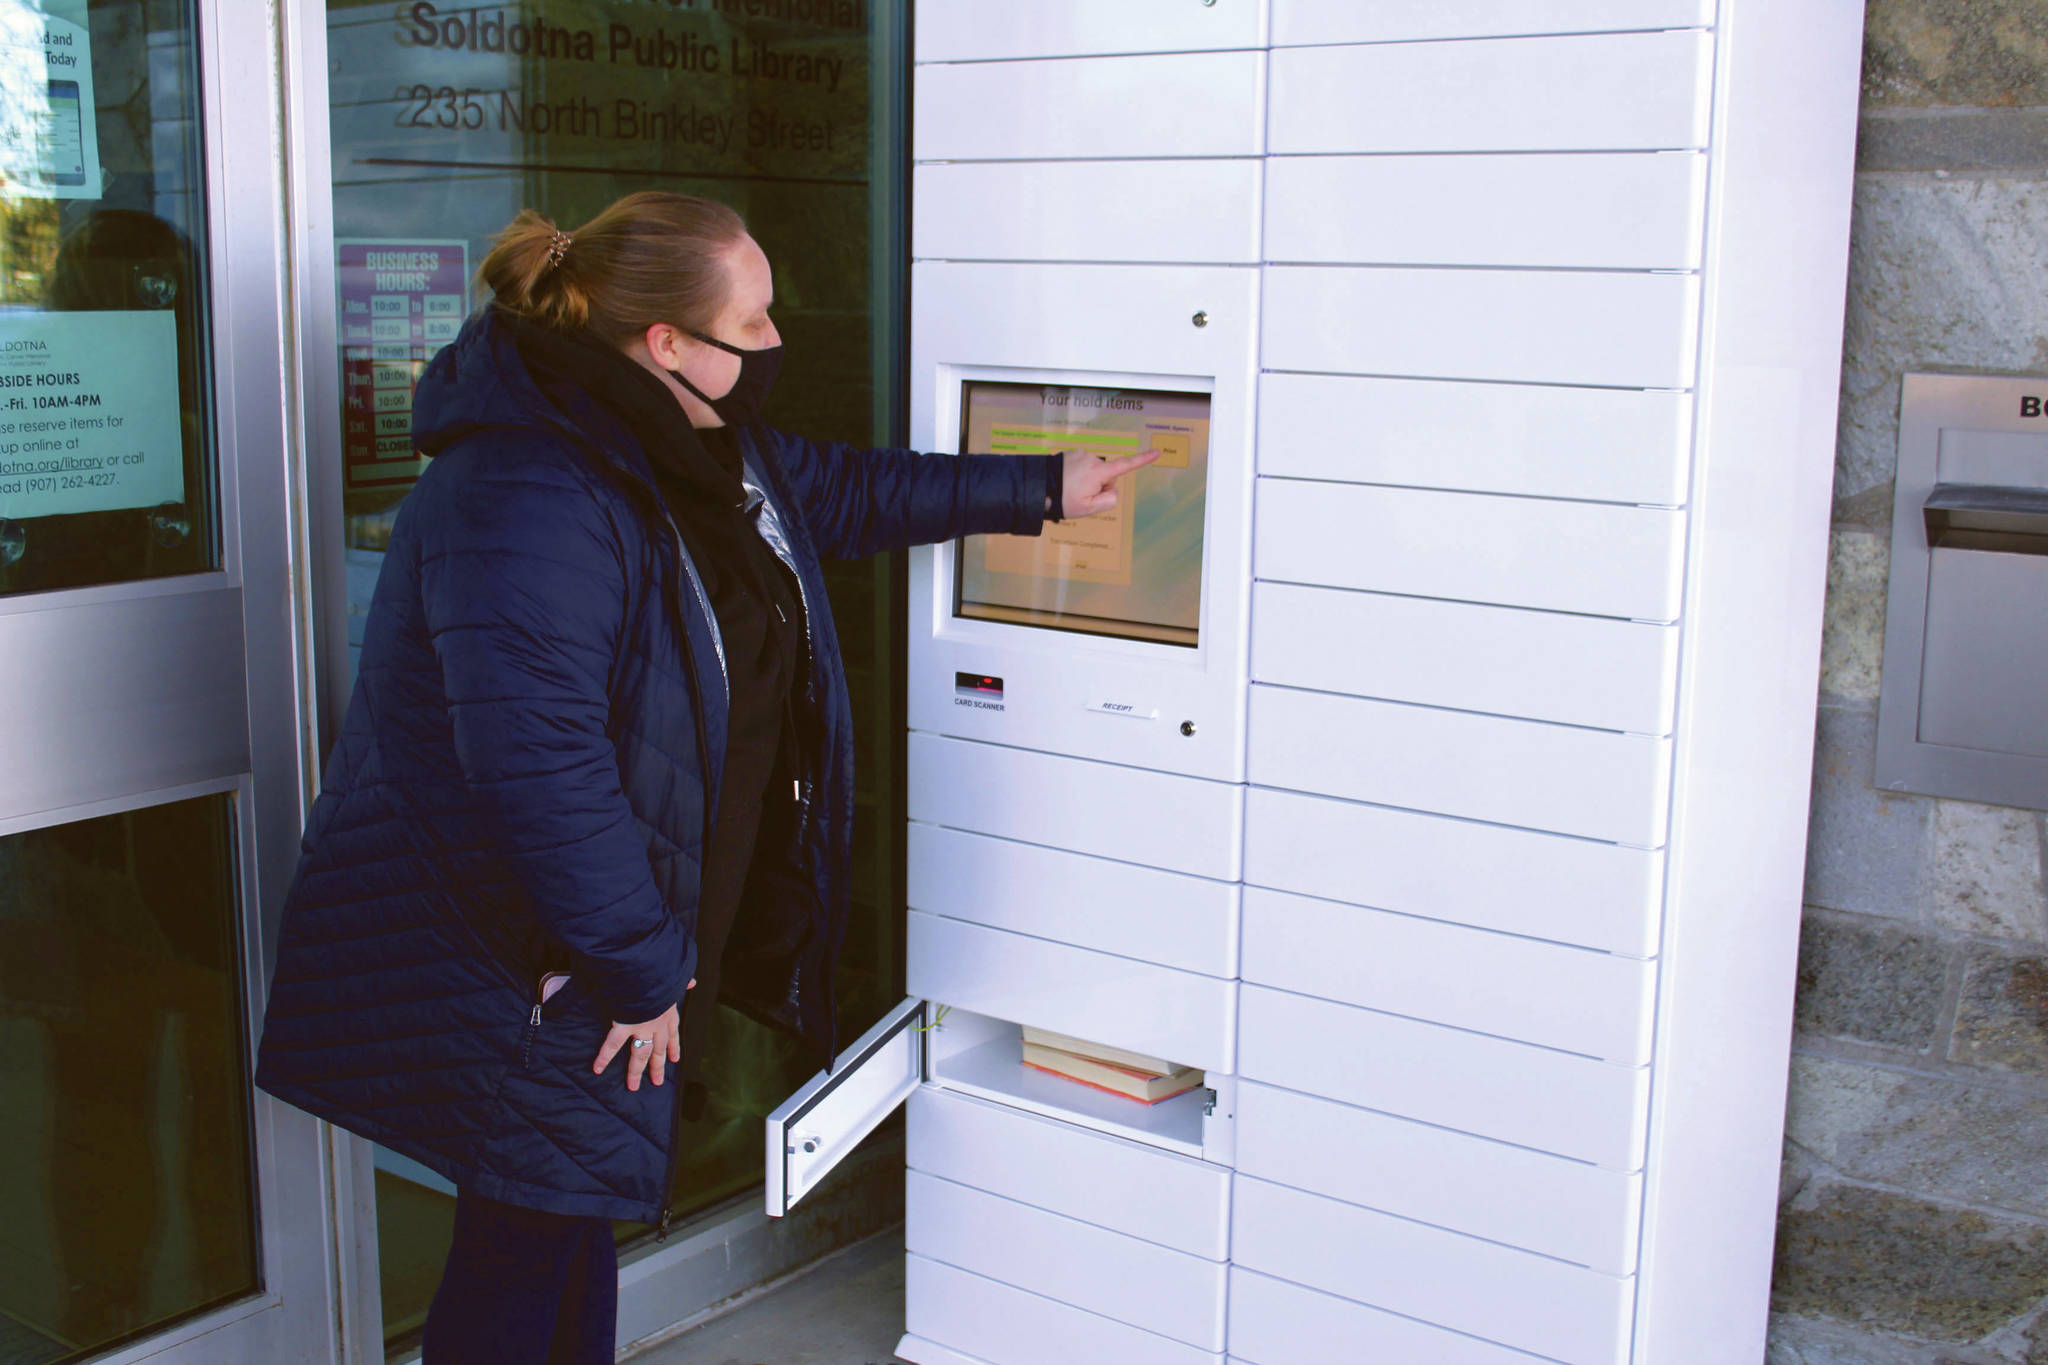 Ryanna Thurman uses a holds locker at the Soldotna Public Library on Friday, Jan. 15 in Soldotna, Alaska. (Ashlyn O’Hara/Peninsula Clarion)